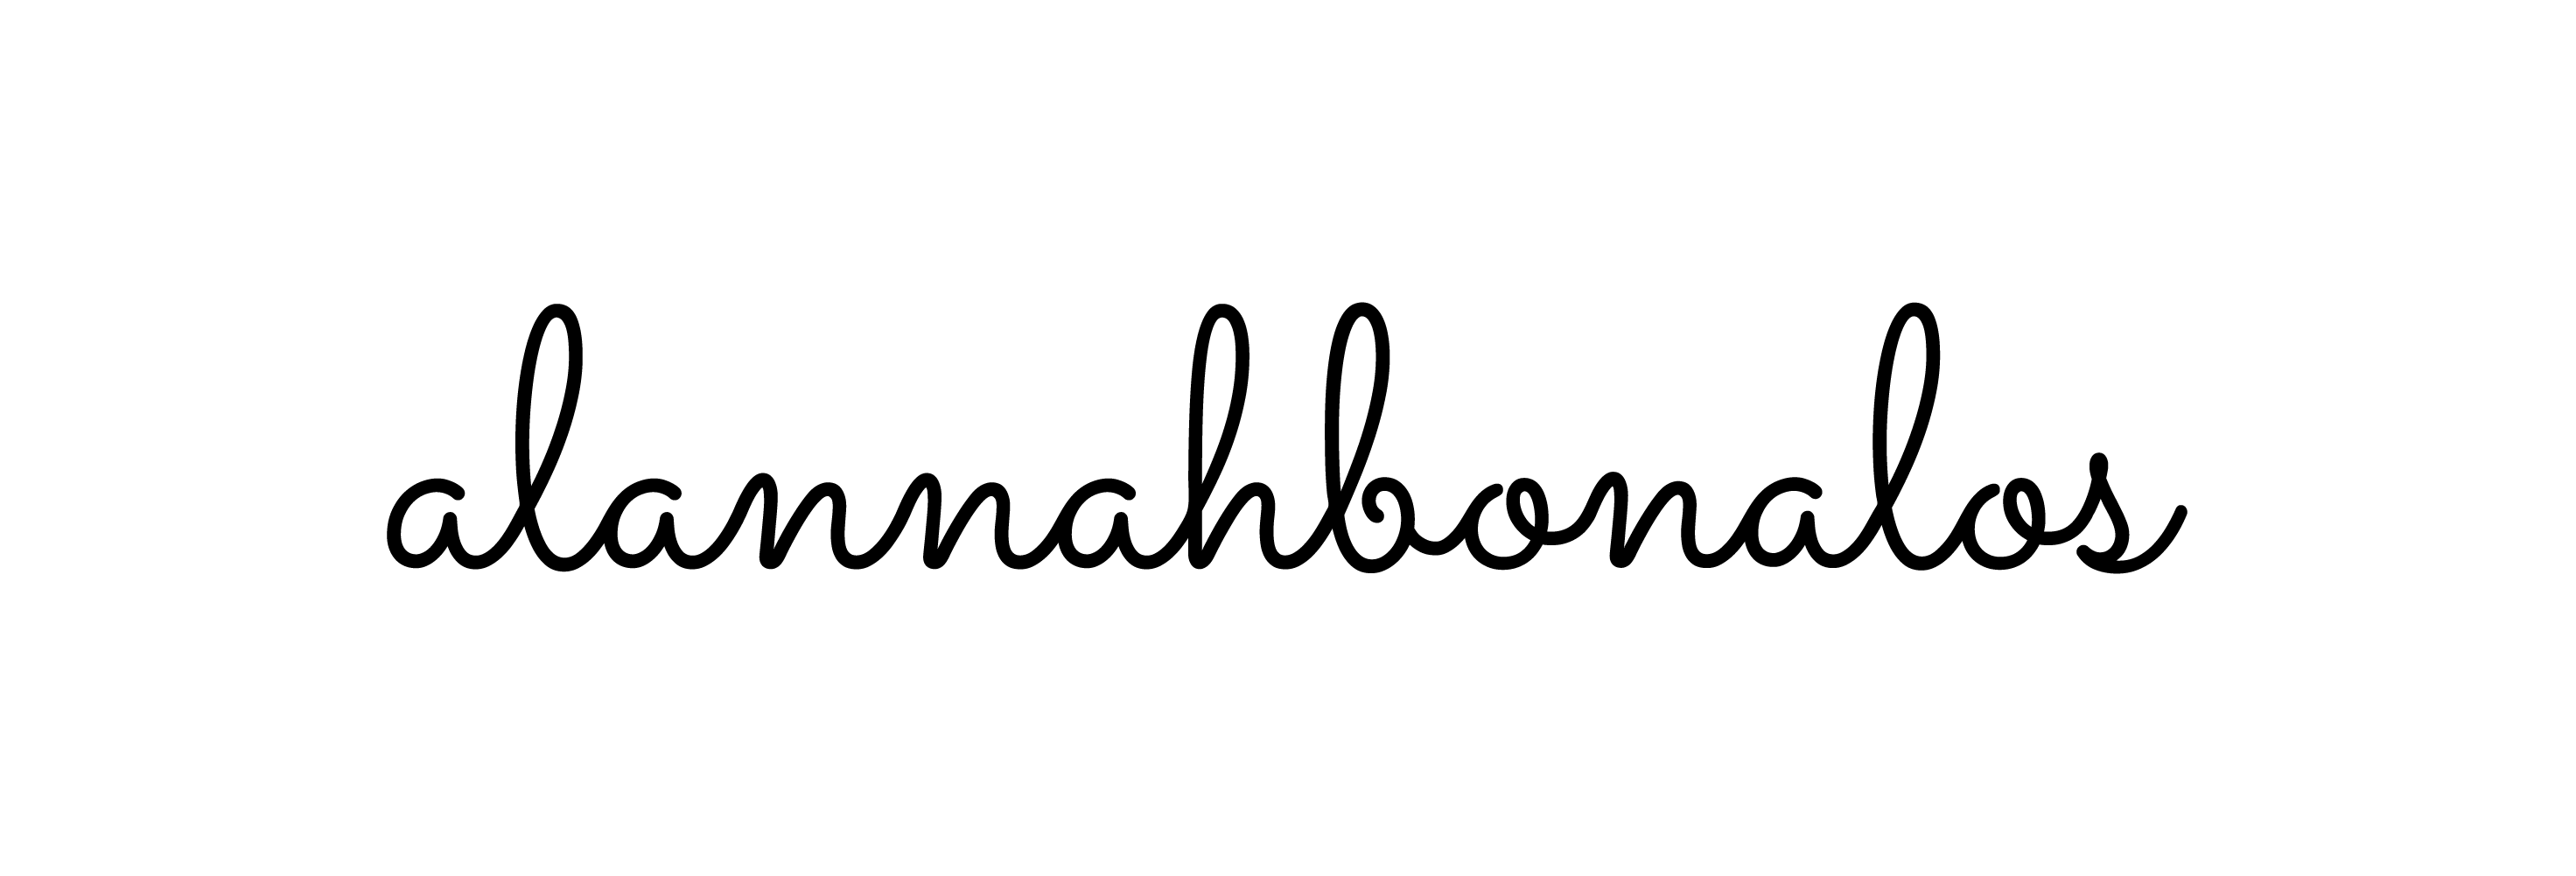 Graphic: logo spells Alannah Bonalos in script lettering